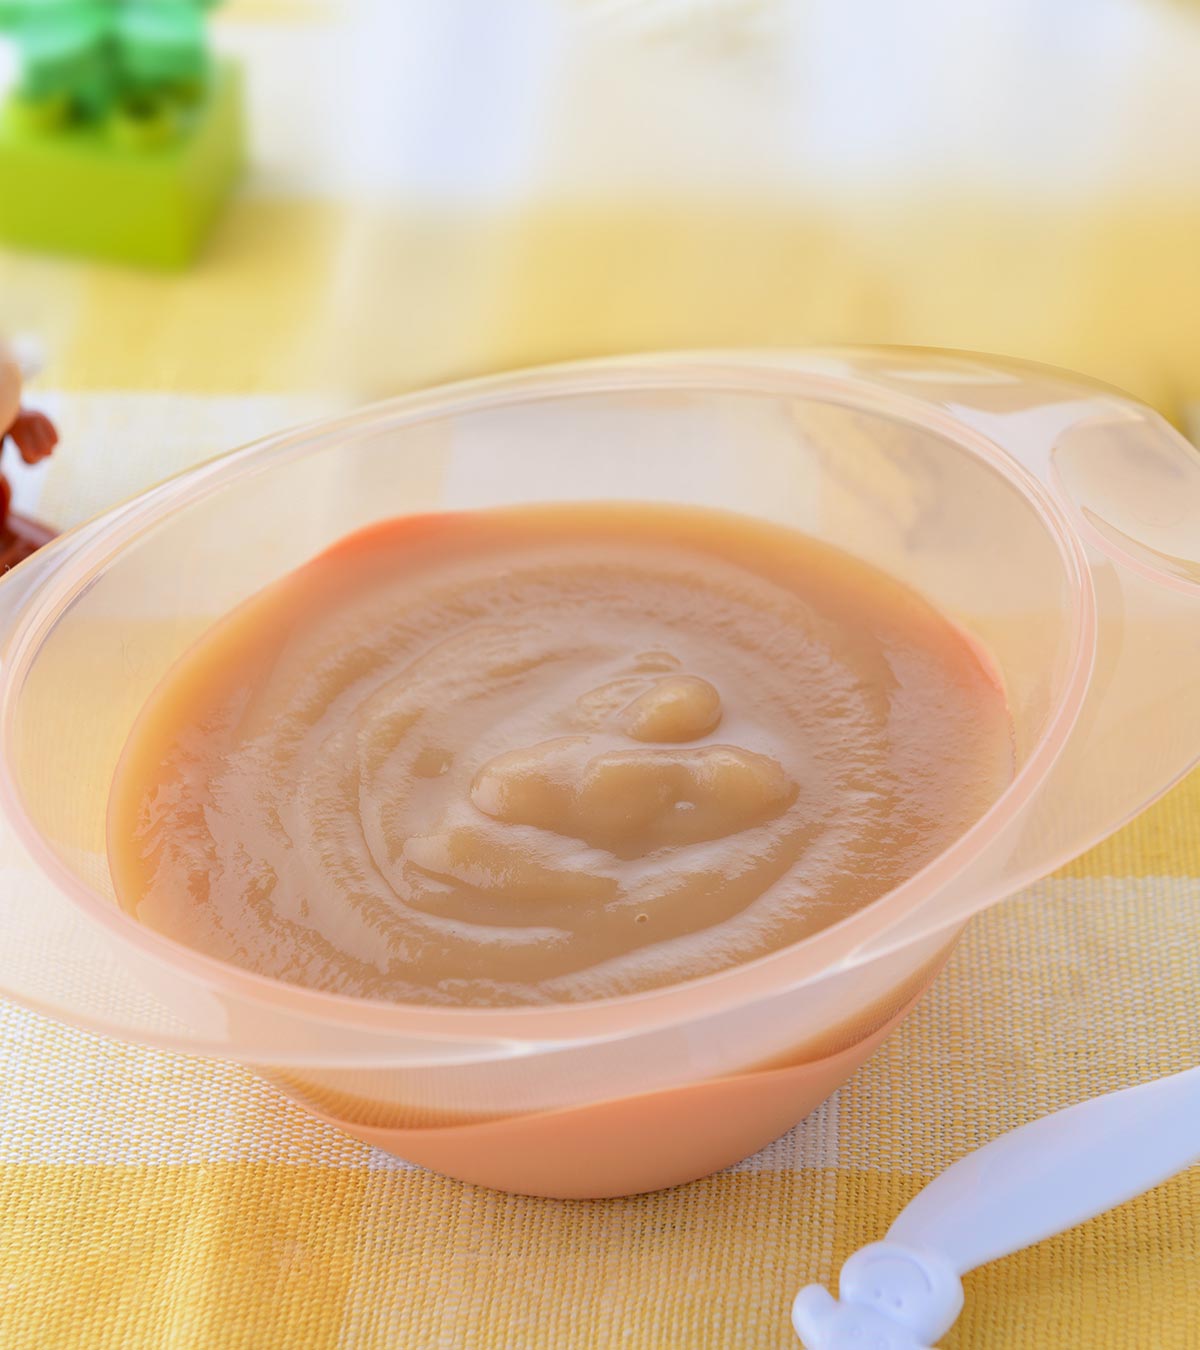 Steps To Prepare Ragi Porridge For Babies